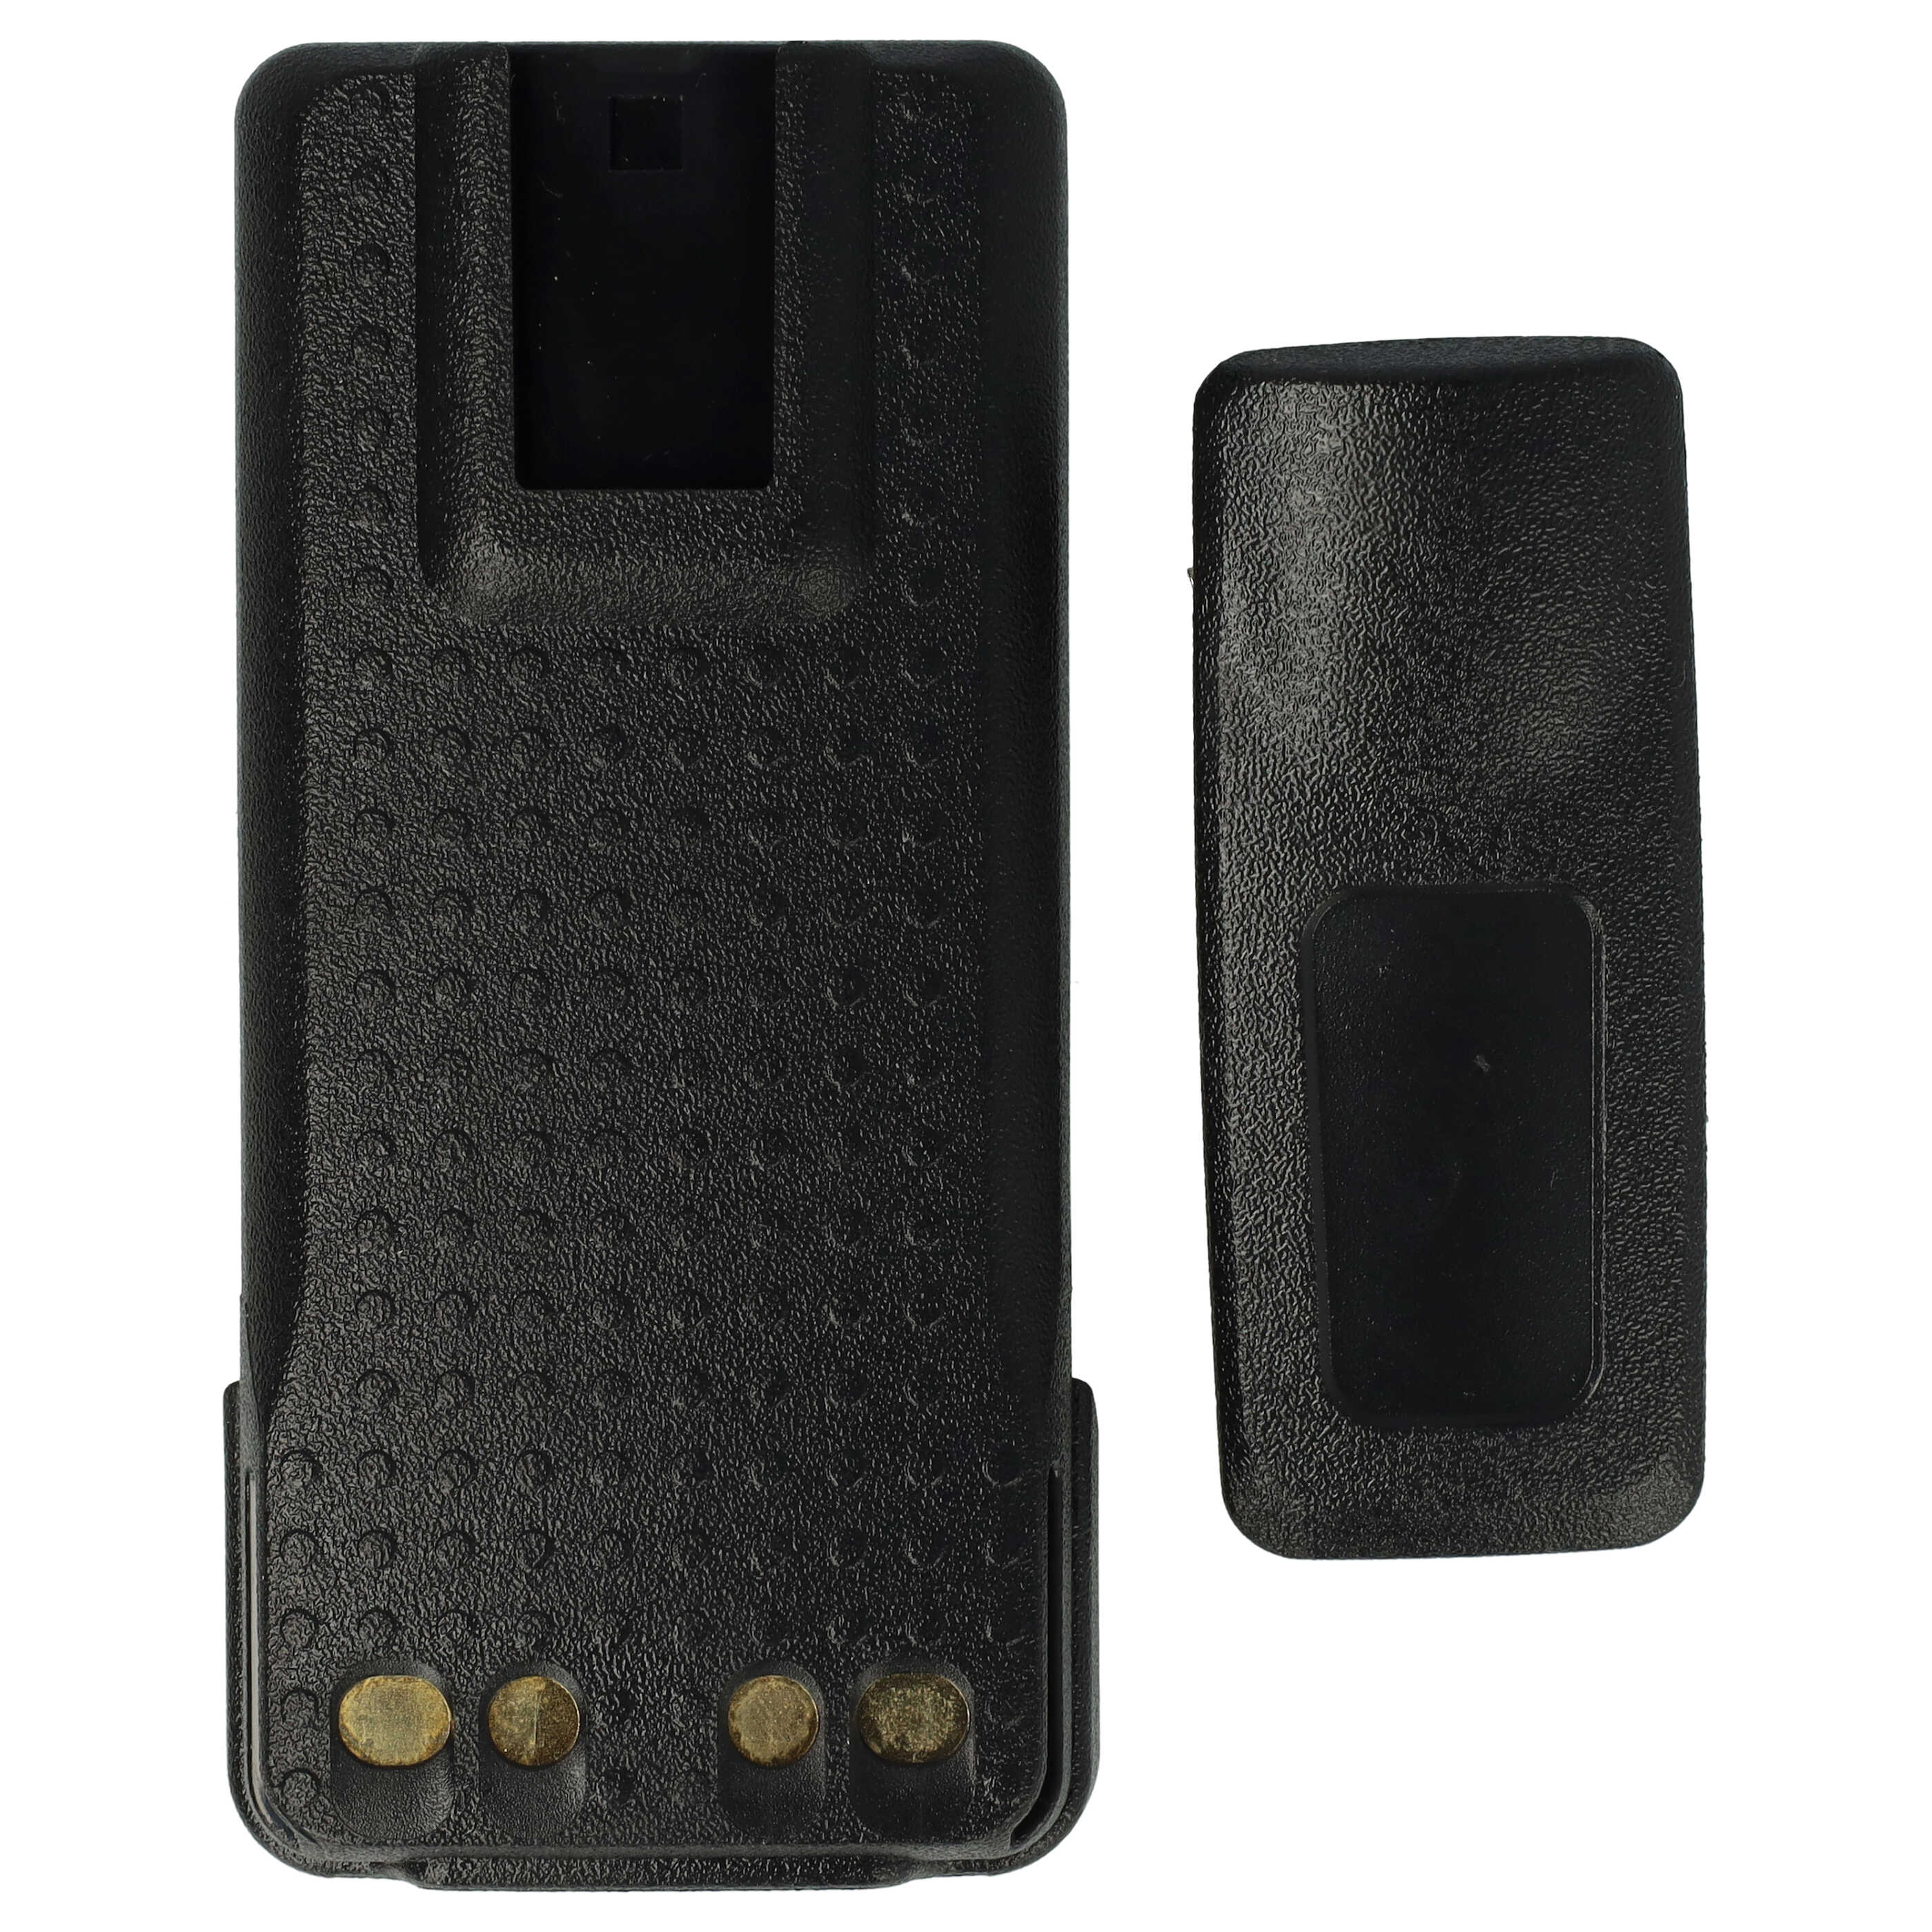 Batería reemplaza Motorola NNTN8560A para radio, walkie-talkie Motorola - 2500 mAh 7,4 V Li-Ion con clip